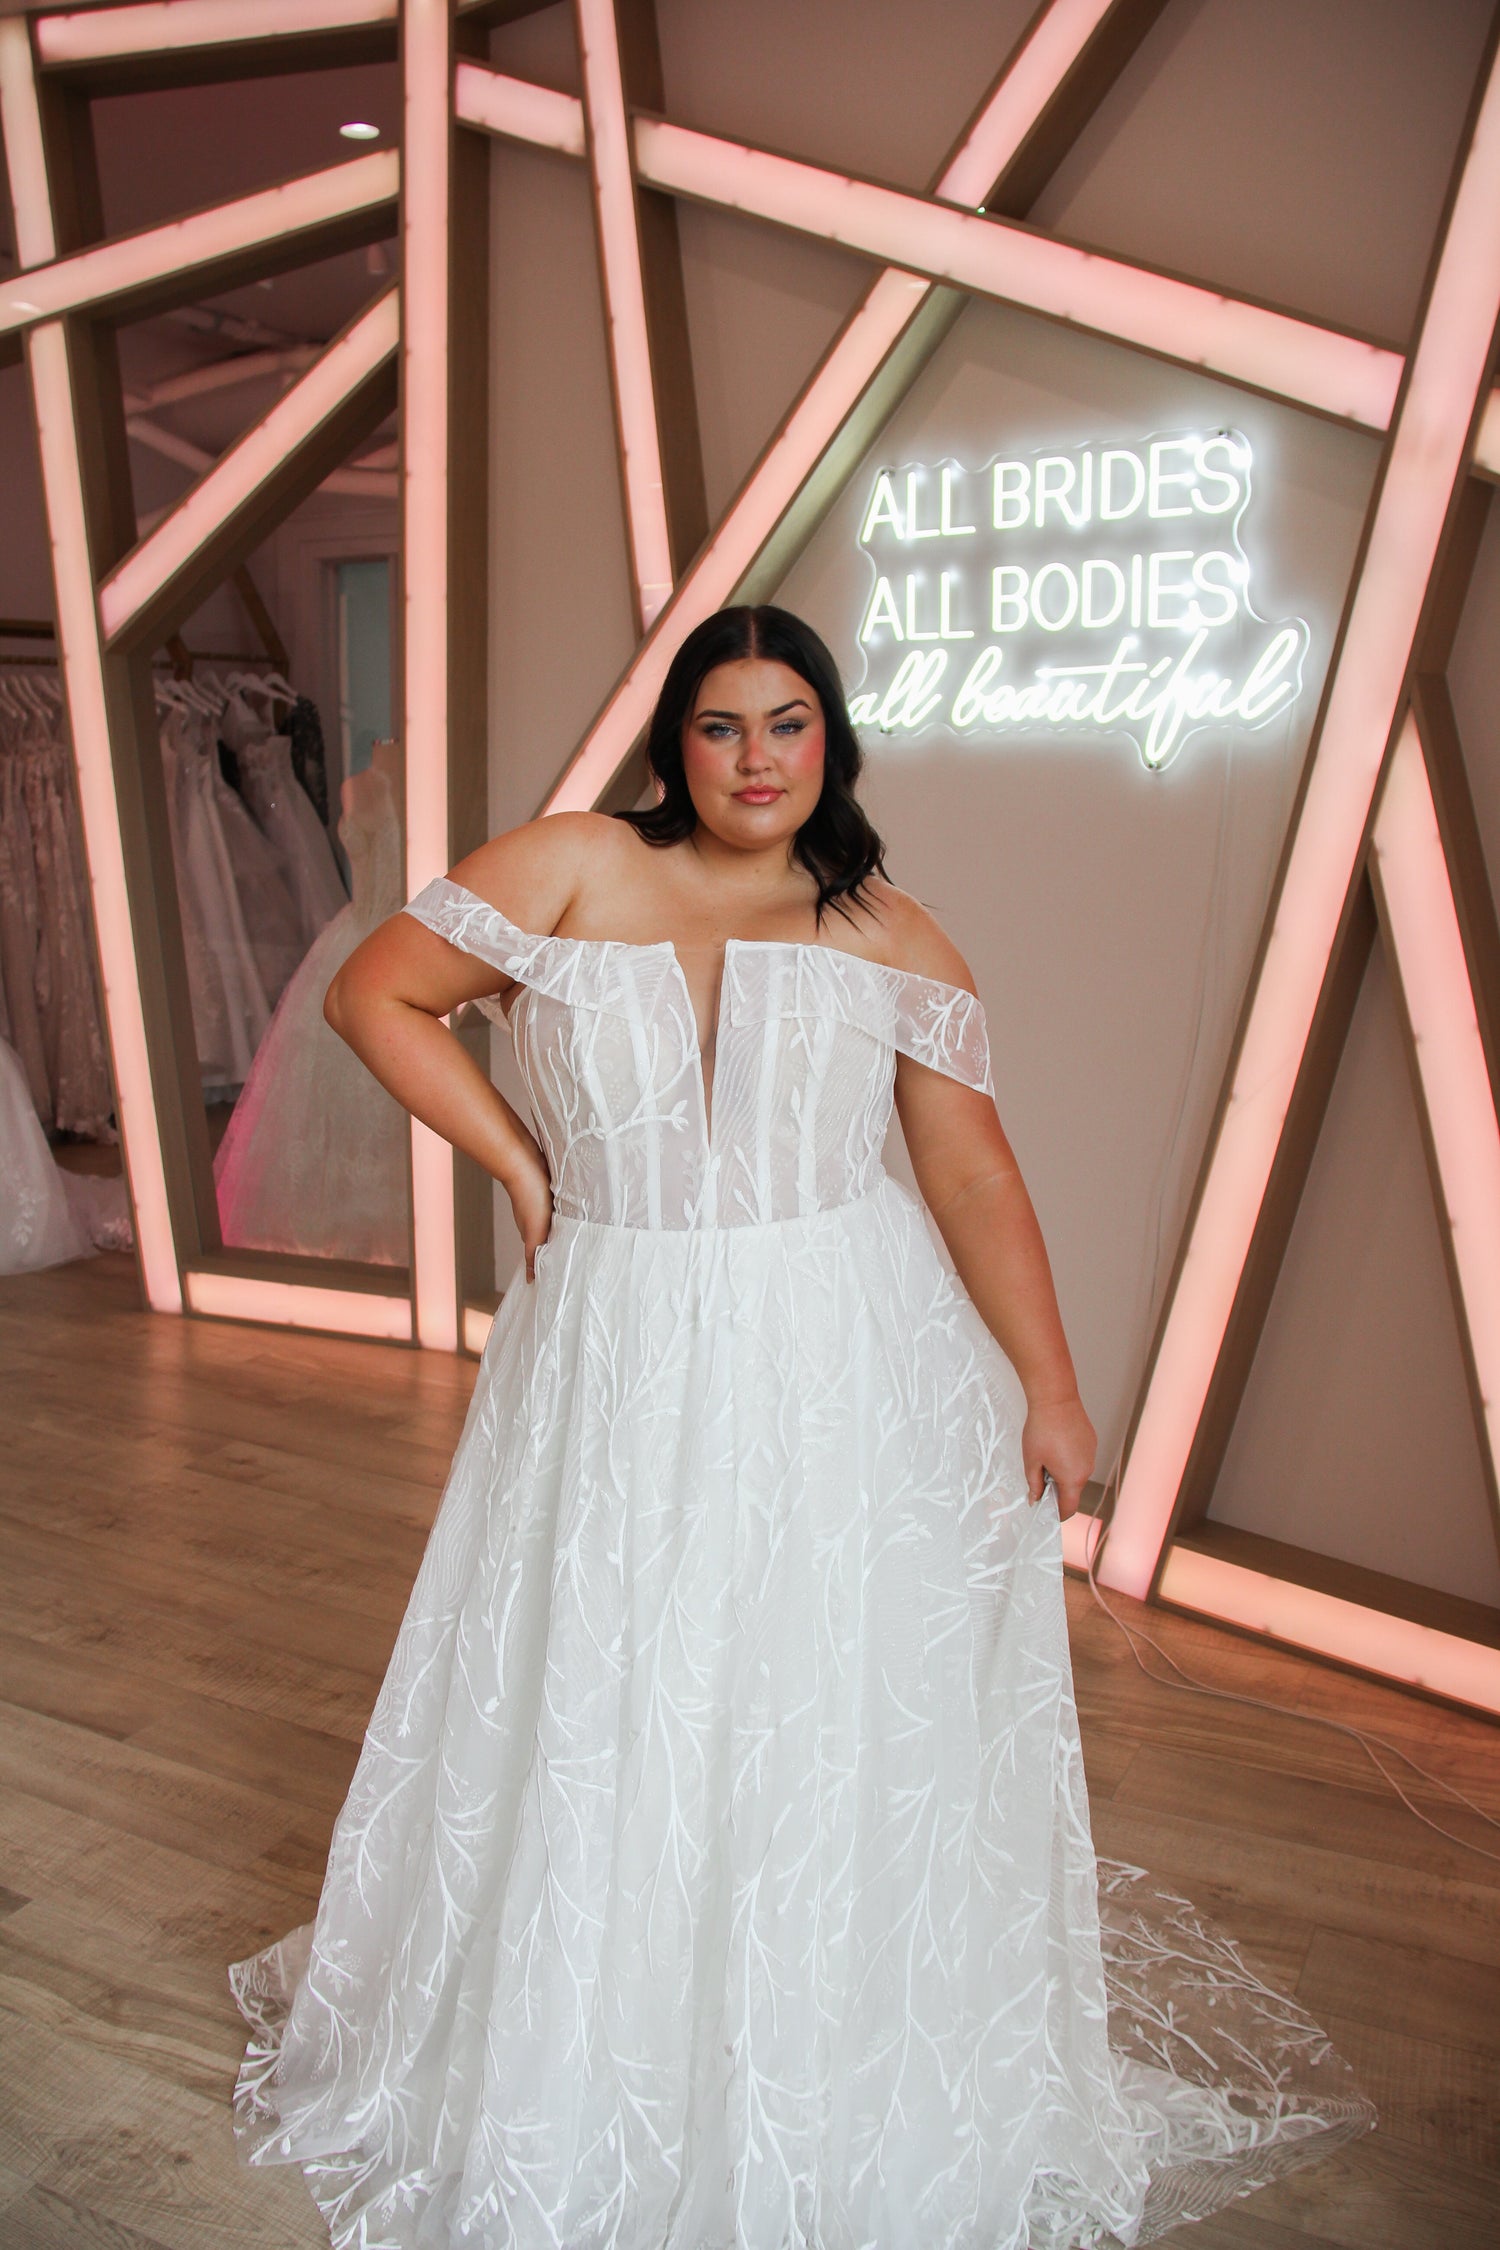 Bridal Closet Unique Designer Wedding Dresses, Utah Bridal Shop